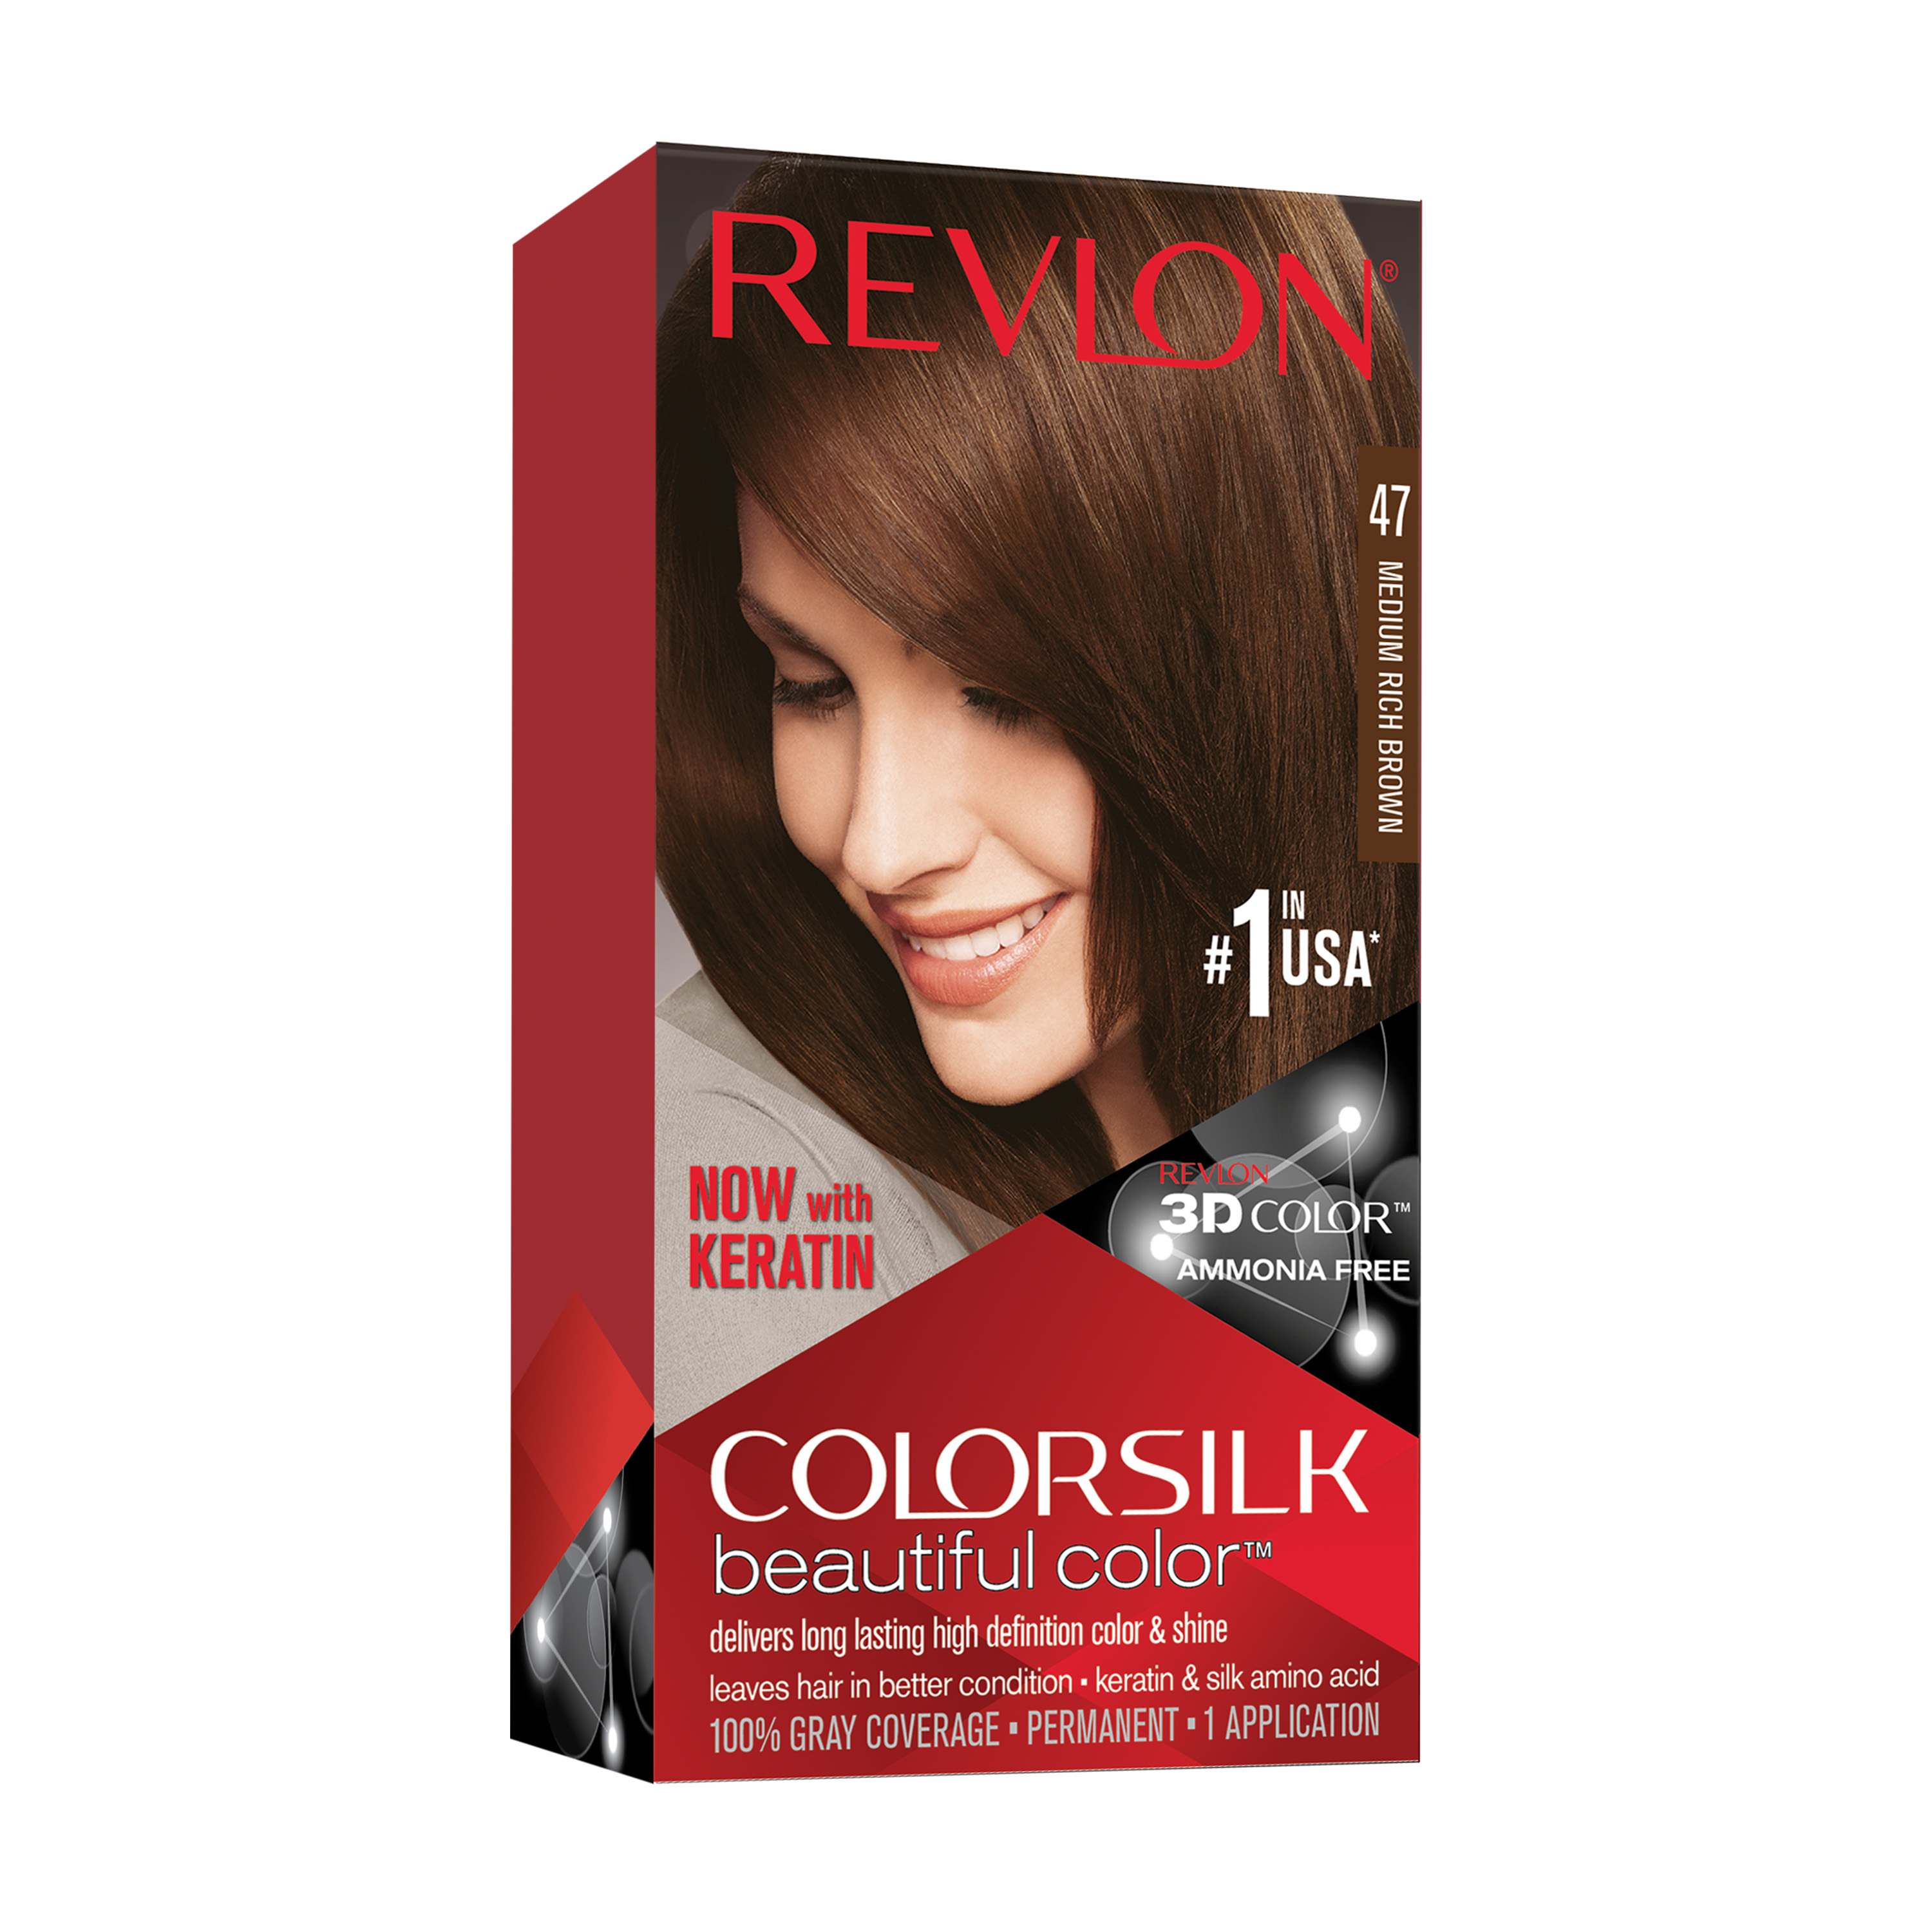 Revlon colorsilk beautiful color 47 medium rich brown permanent hair color, 1 application - image 1 of 14